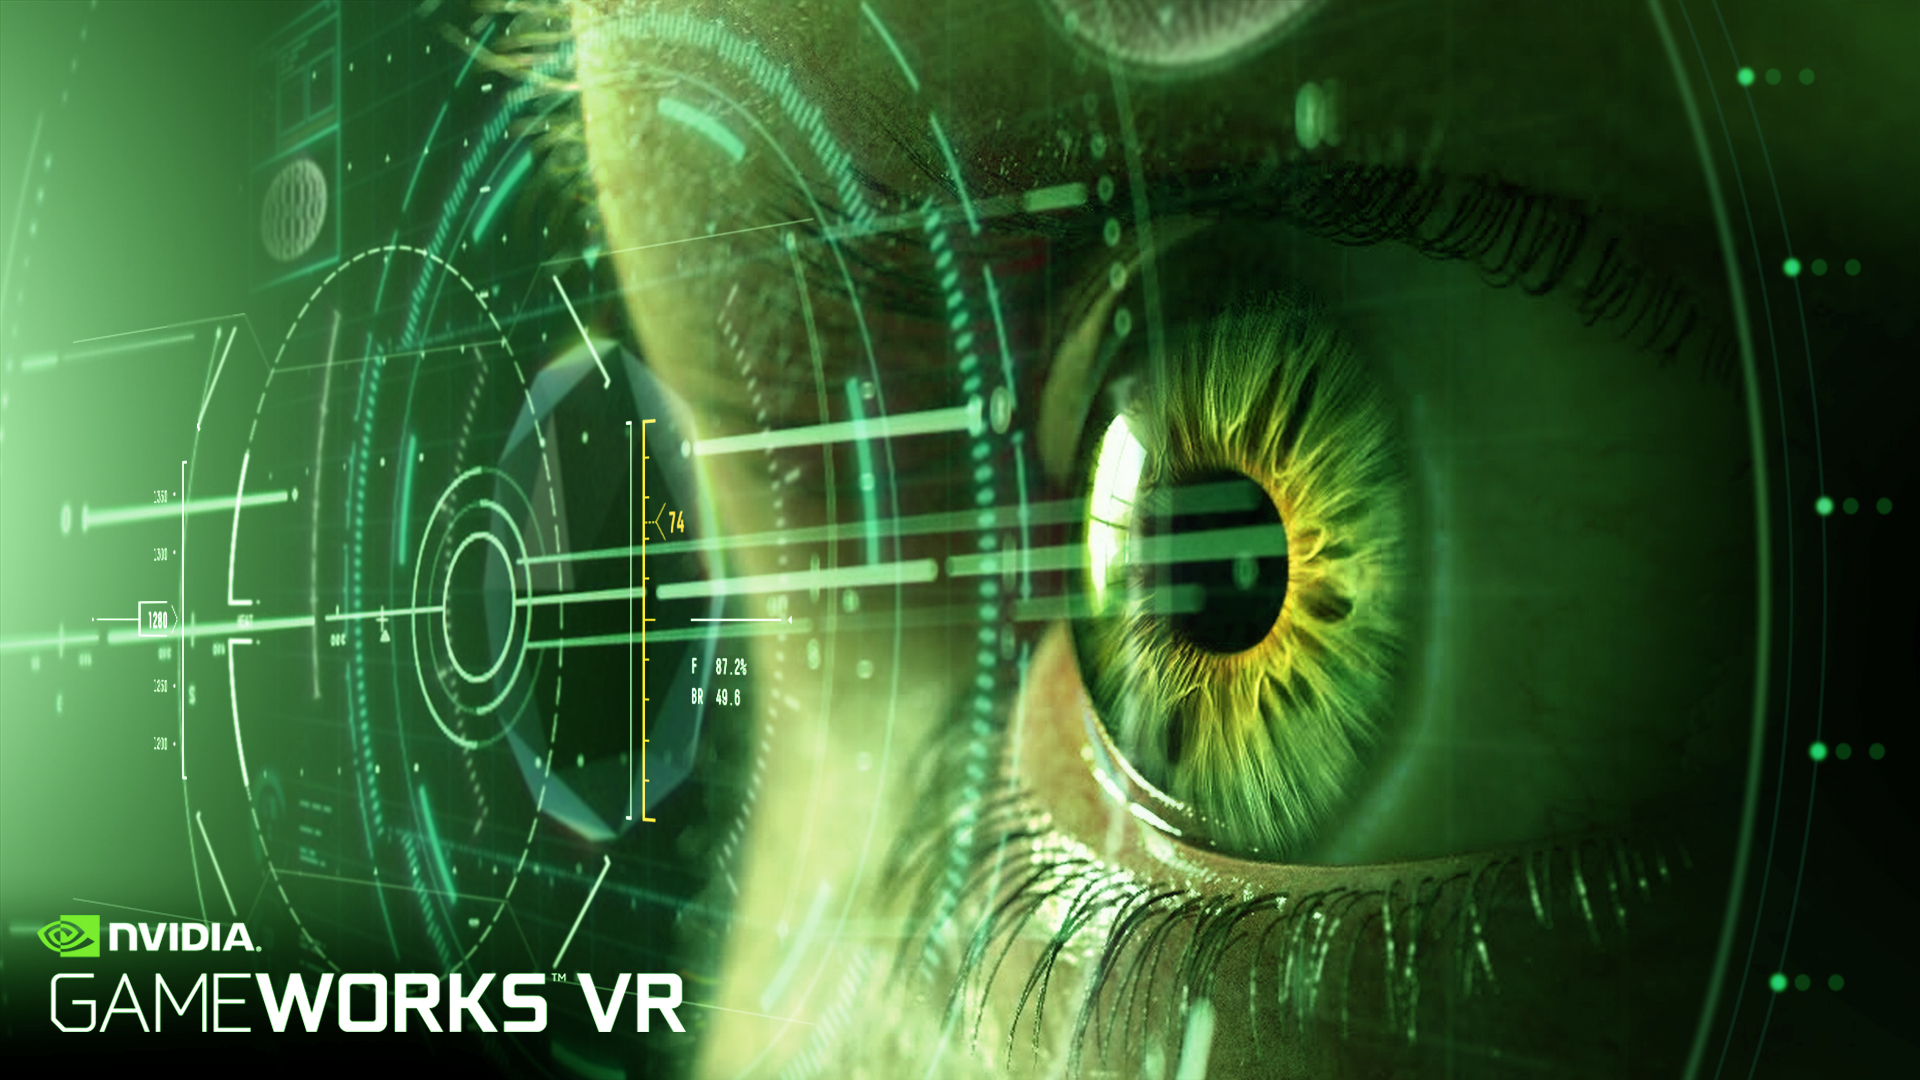 Gameworks VR, NVIDIA’s Direct Driver Mode for the Oculus Rift